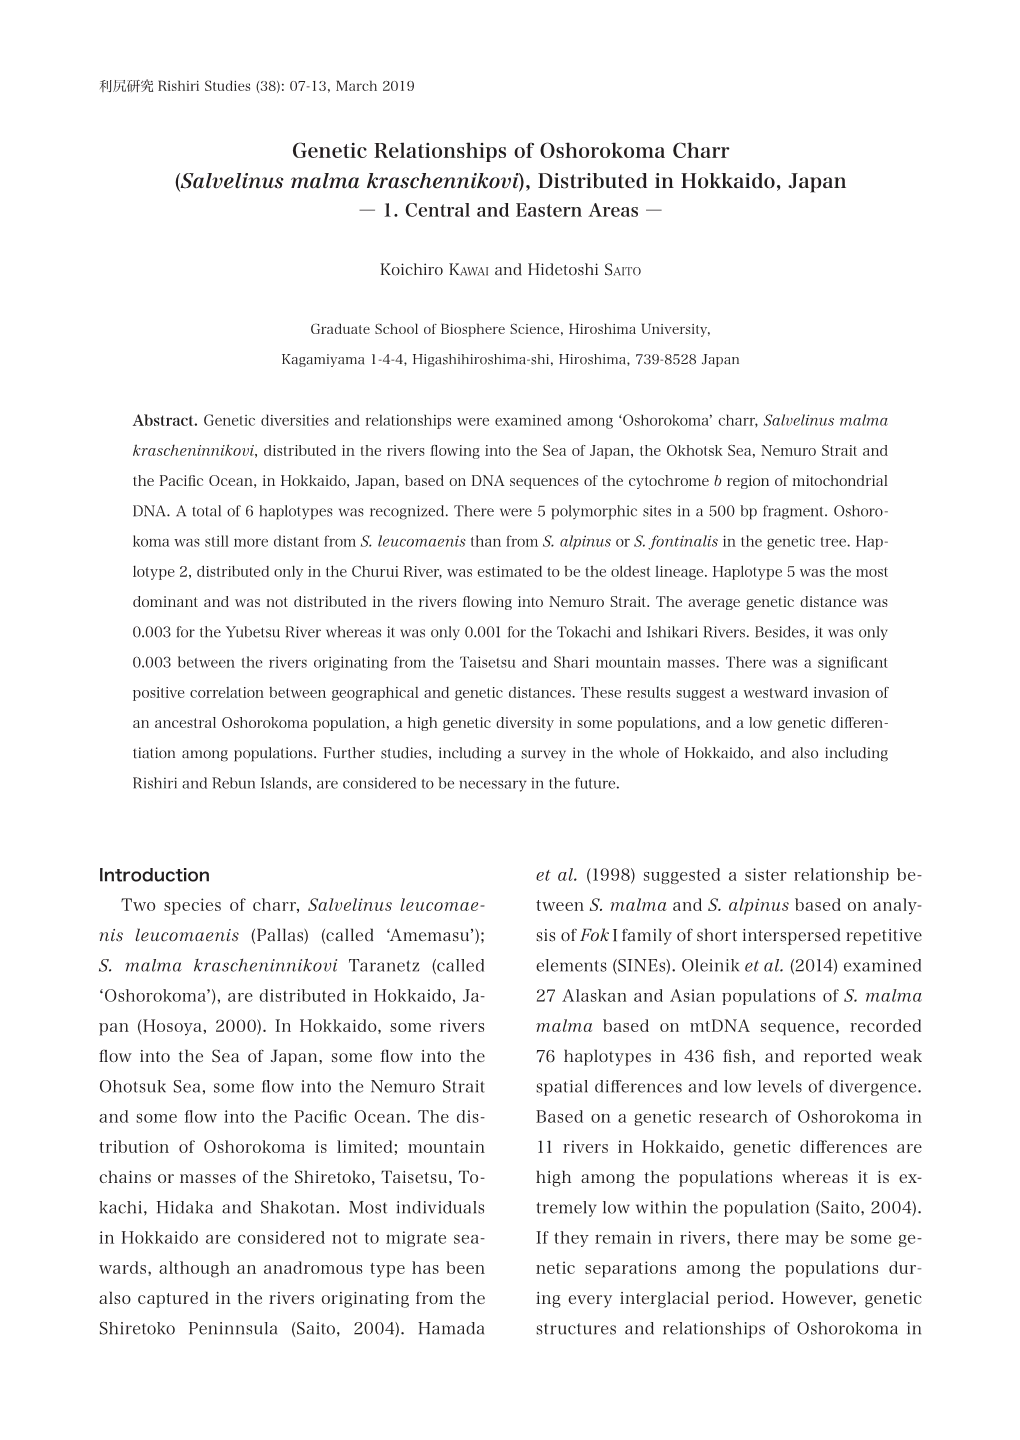 Genetic Relationships of Oshorokoma Charr (Salvelinus Malma Kraschennikovi), Distributed in Hokkaido, Japan ― 1